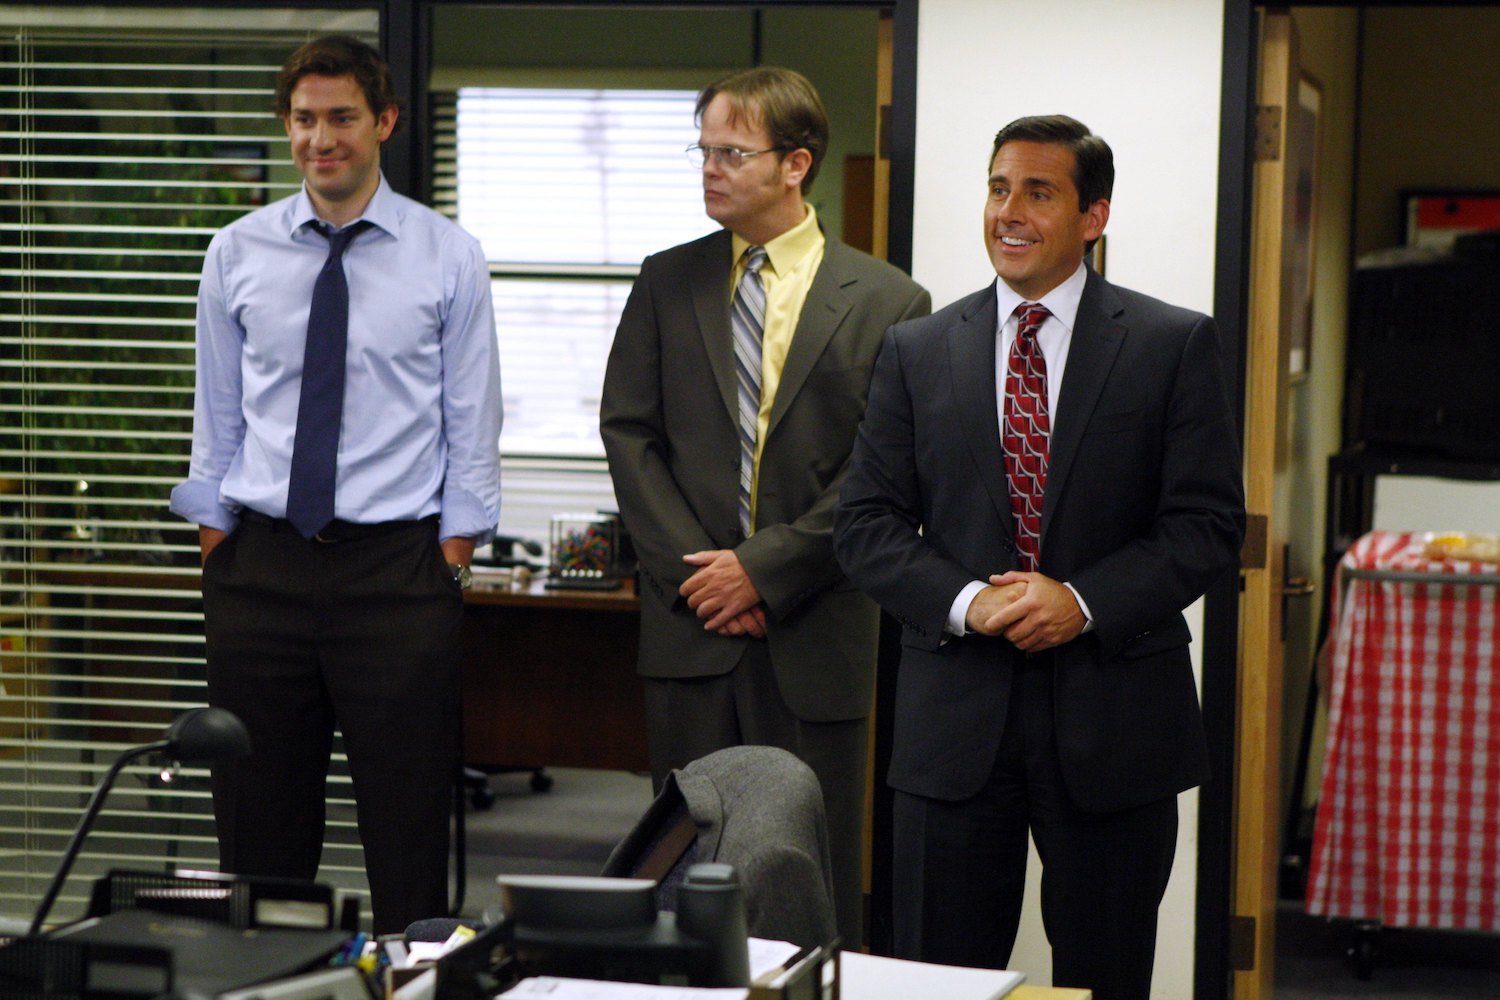 The Office cast John Krasinski, Rainn Wilson, and Steve Carell as their characters Jim, Dwight, and Michael